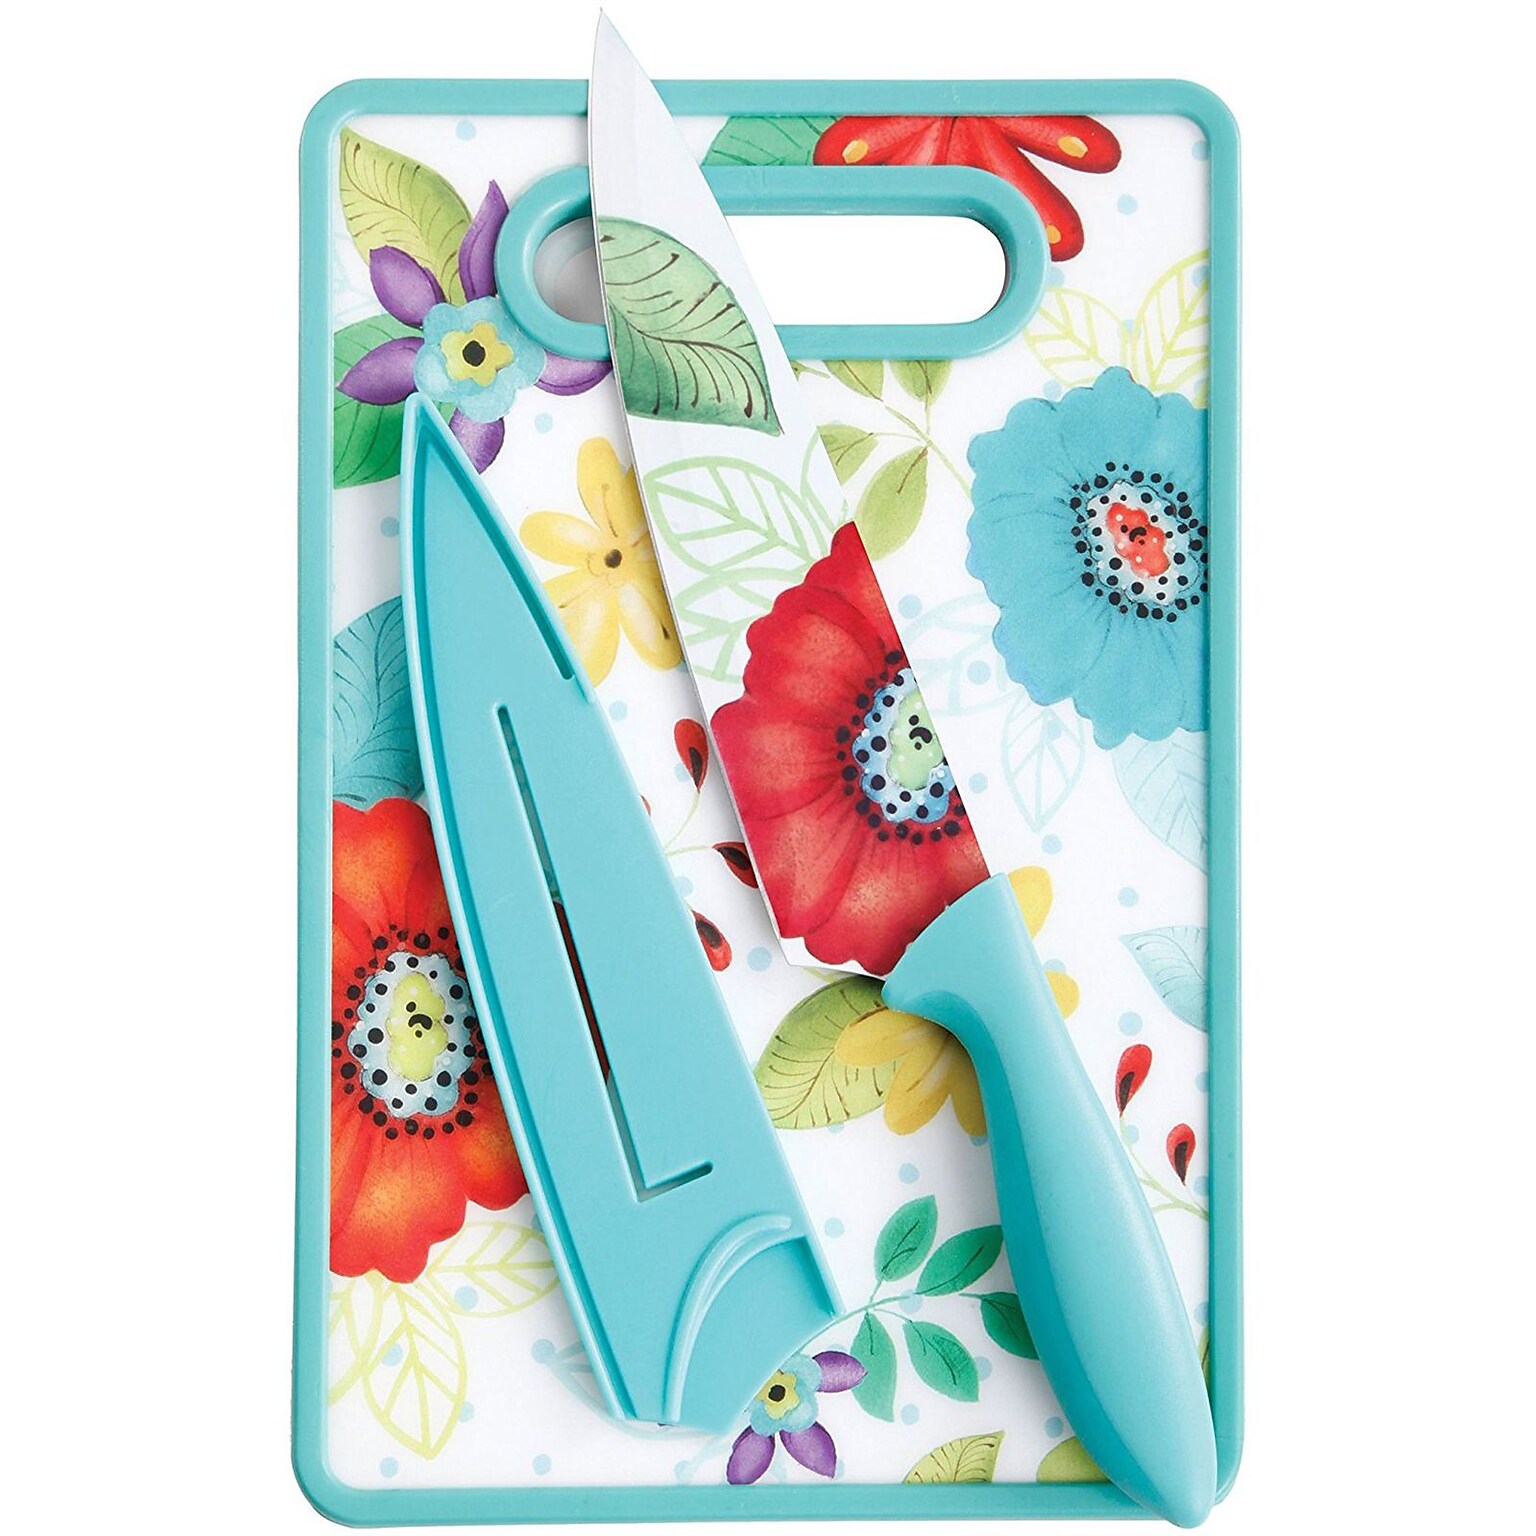 Studio California Jordana 8 Chef Knife W/Sheath & Cutting Board, Turquoise Floral Pattern (112065.03)